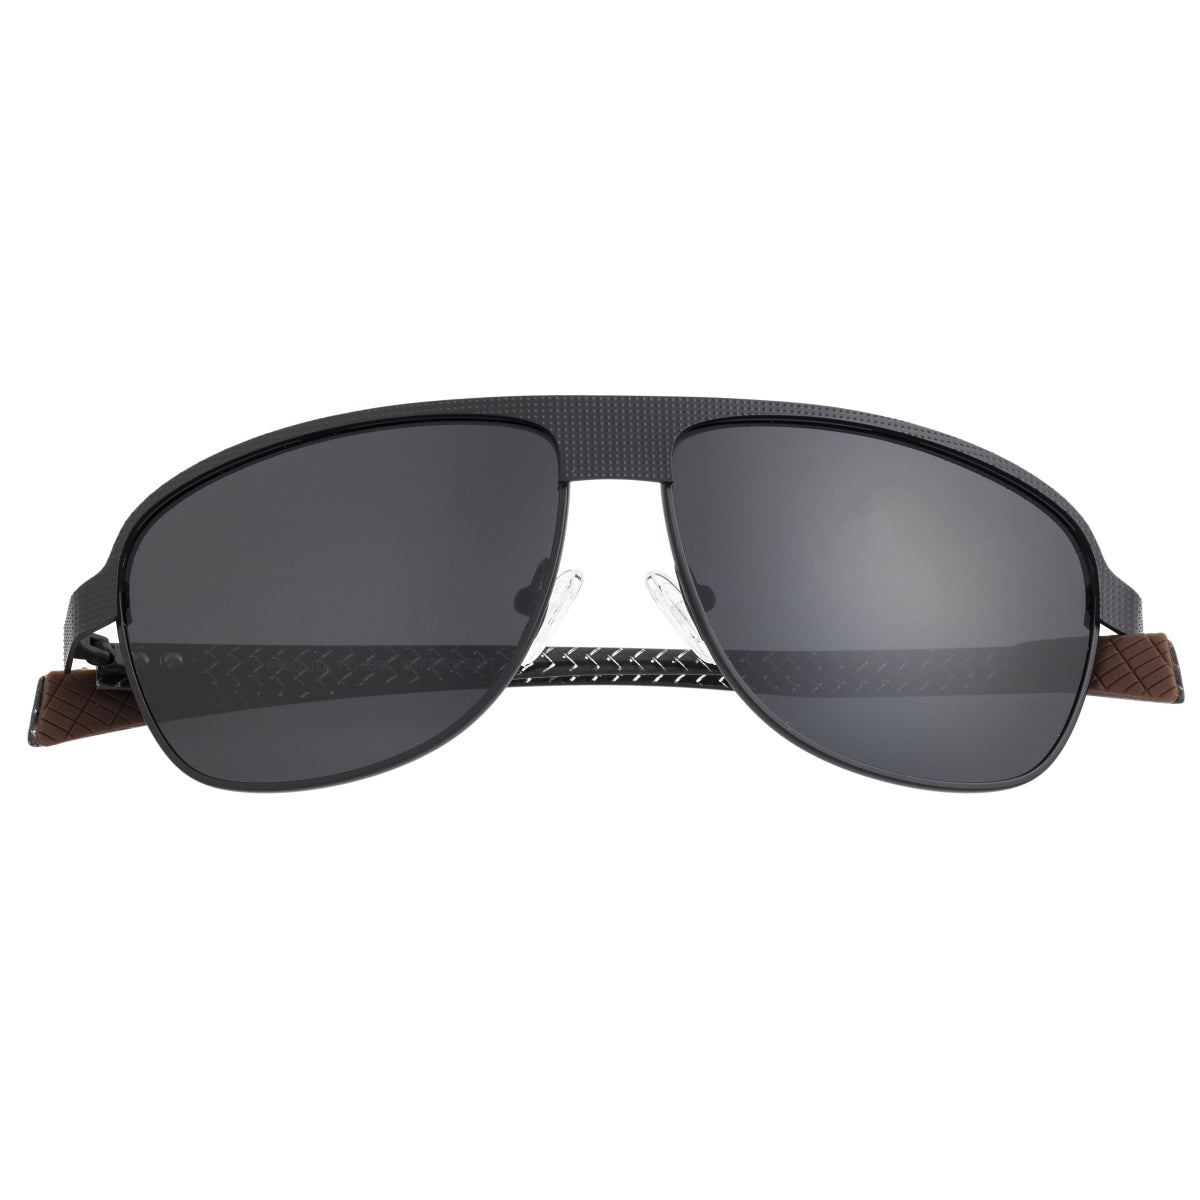 Breed Hardwell Titanium and Carbon Fiber Polarized Sunglasses - Black/Black - BSG007BK